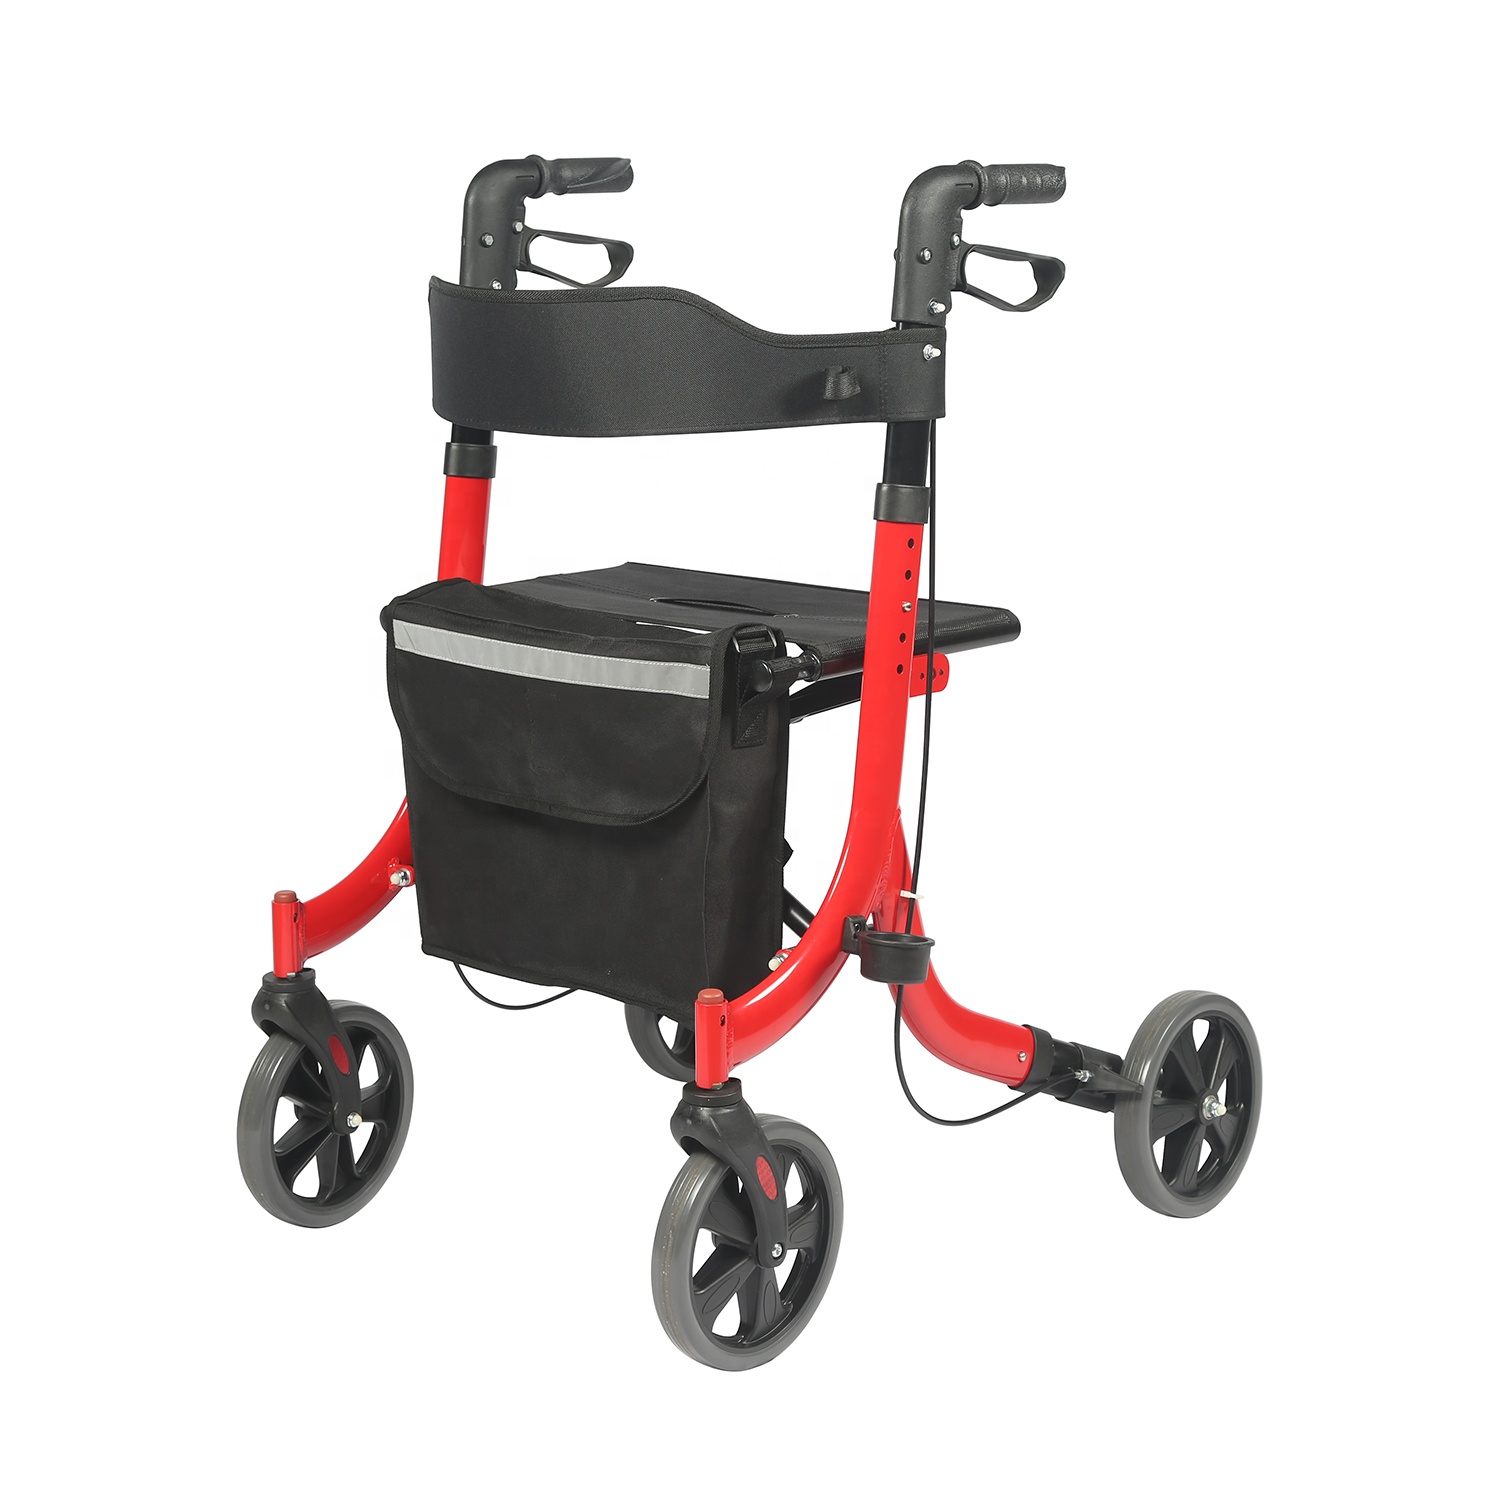 Folding Rollator Walker with Seat & Bag, Height Adjustable & Mobility Lightweight Rolling Adult Walker for Elderly & Senior